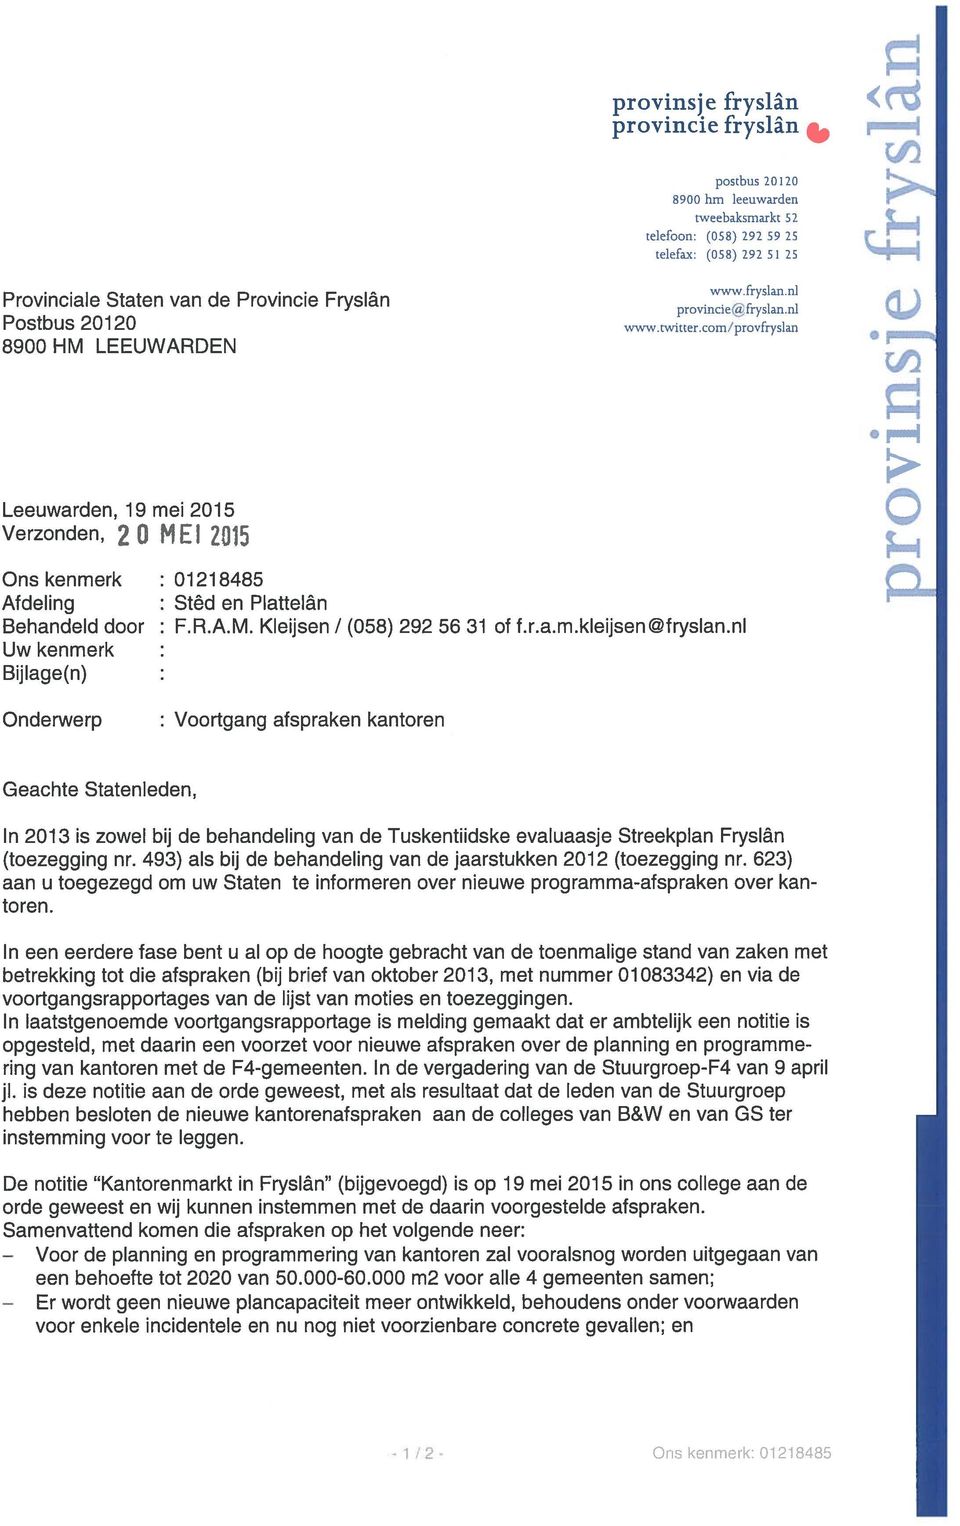 com/provfryslan Leeuwarden, 19 mei 2015 Verzonden, 2 0 MEI 2015 Ons kenmerk : 01218485 Afdeling : Stêd en Plattelân Behandeld door : F.R.A.M. Kleijsen / (058) 292 56 31 of f.r.a.m.kleijsen@fryslan.